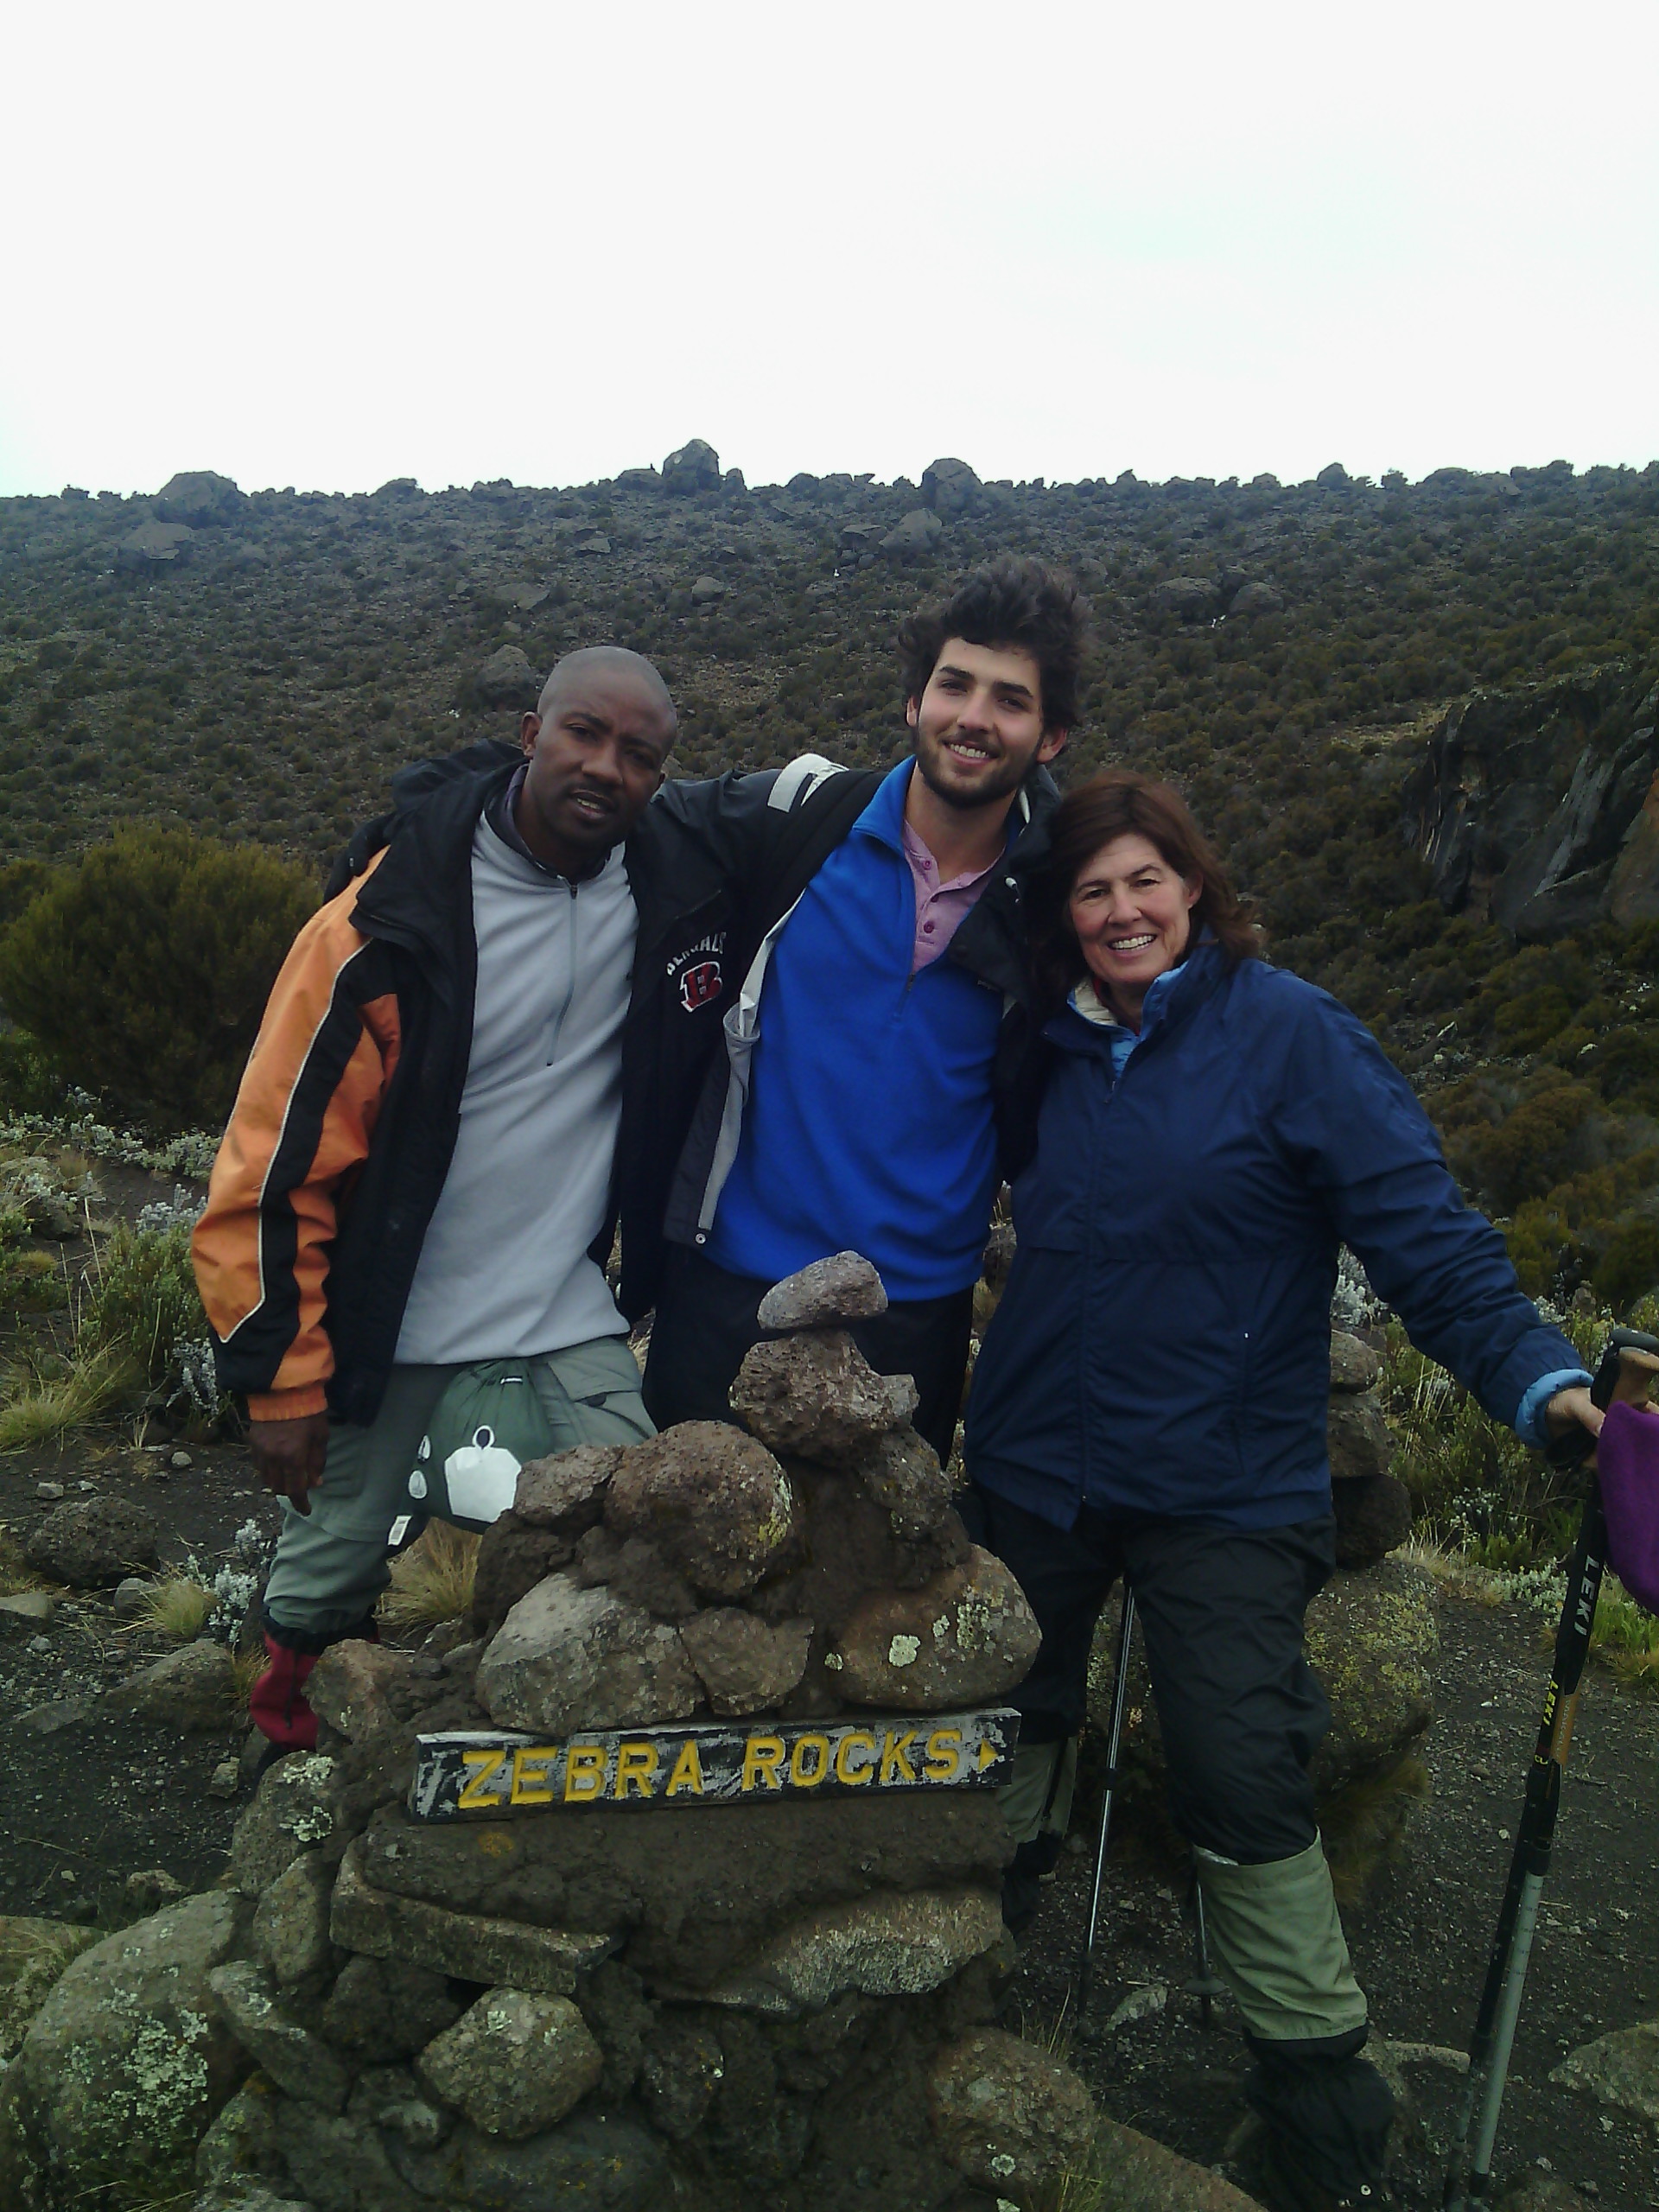 Marangu route Climbing Kilimanjaro